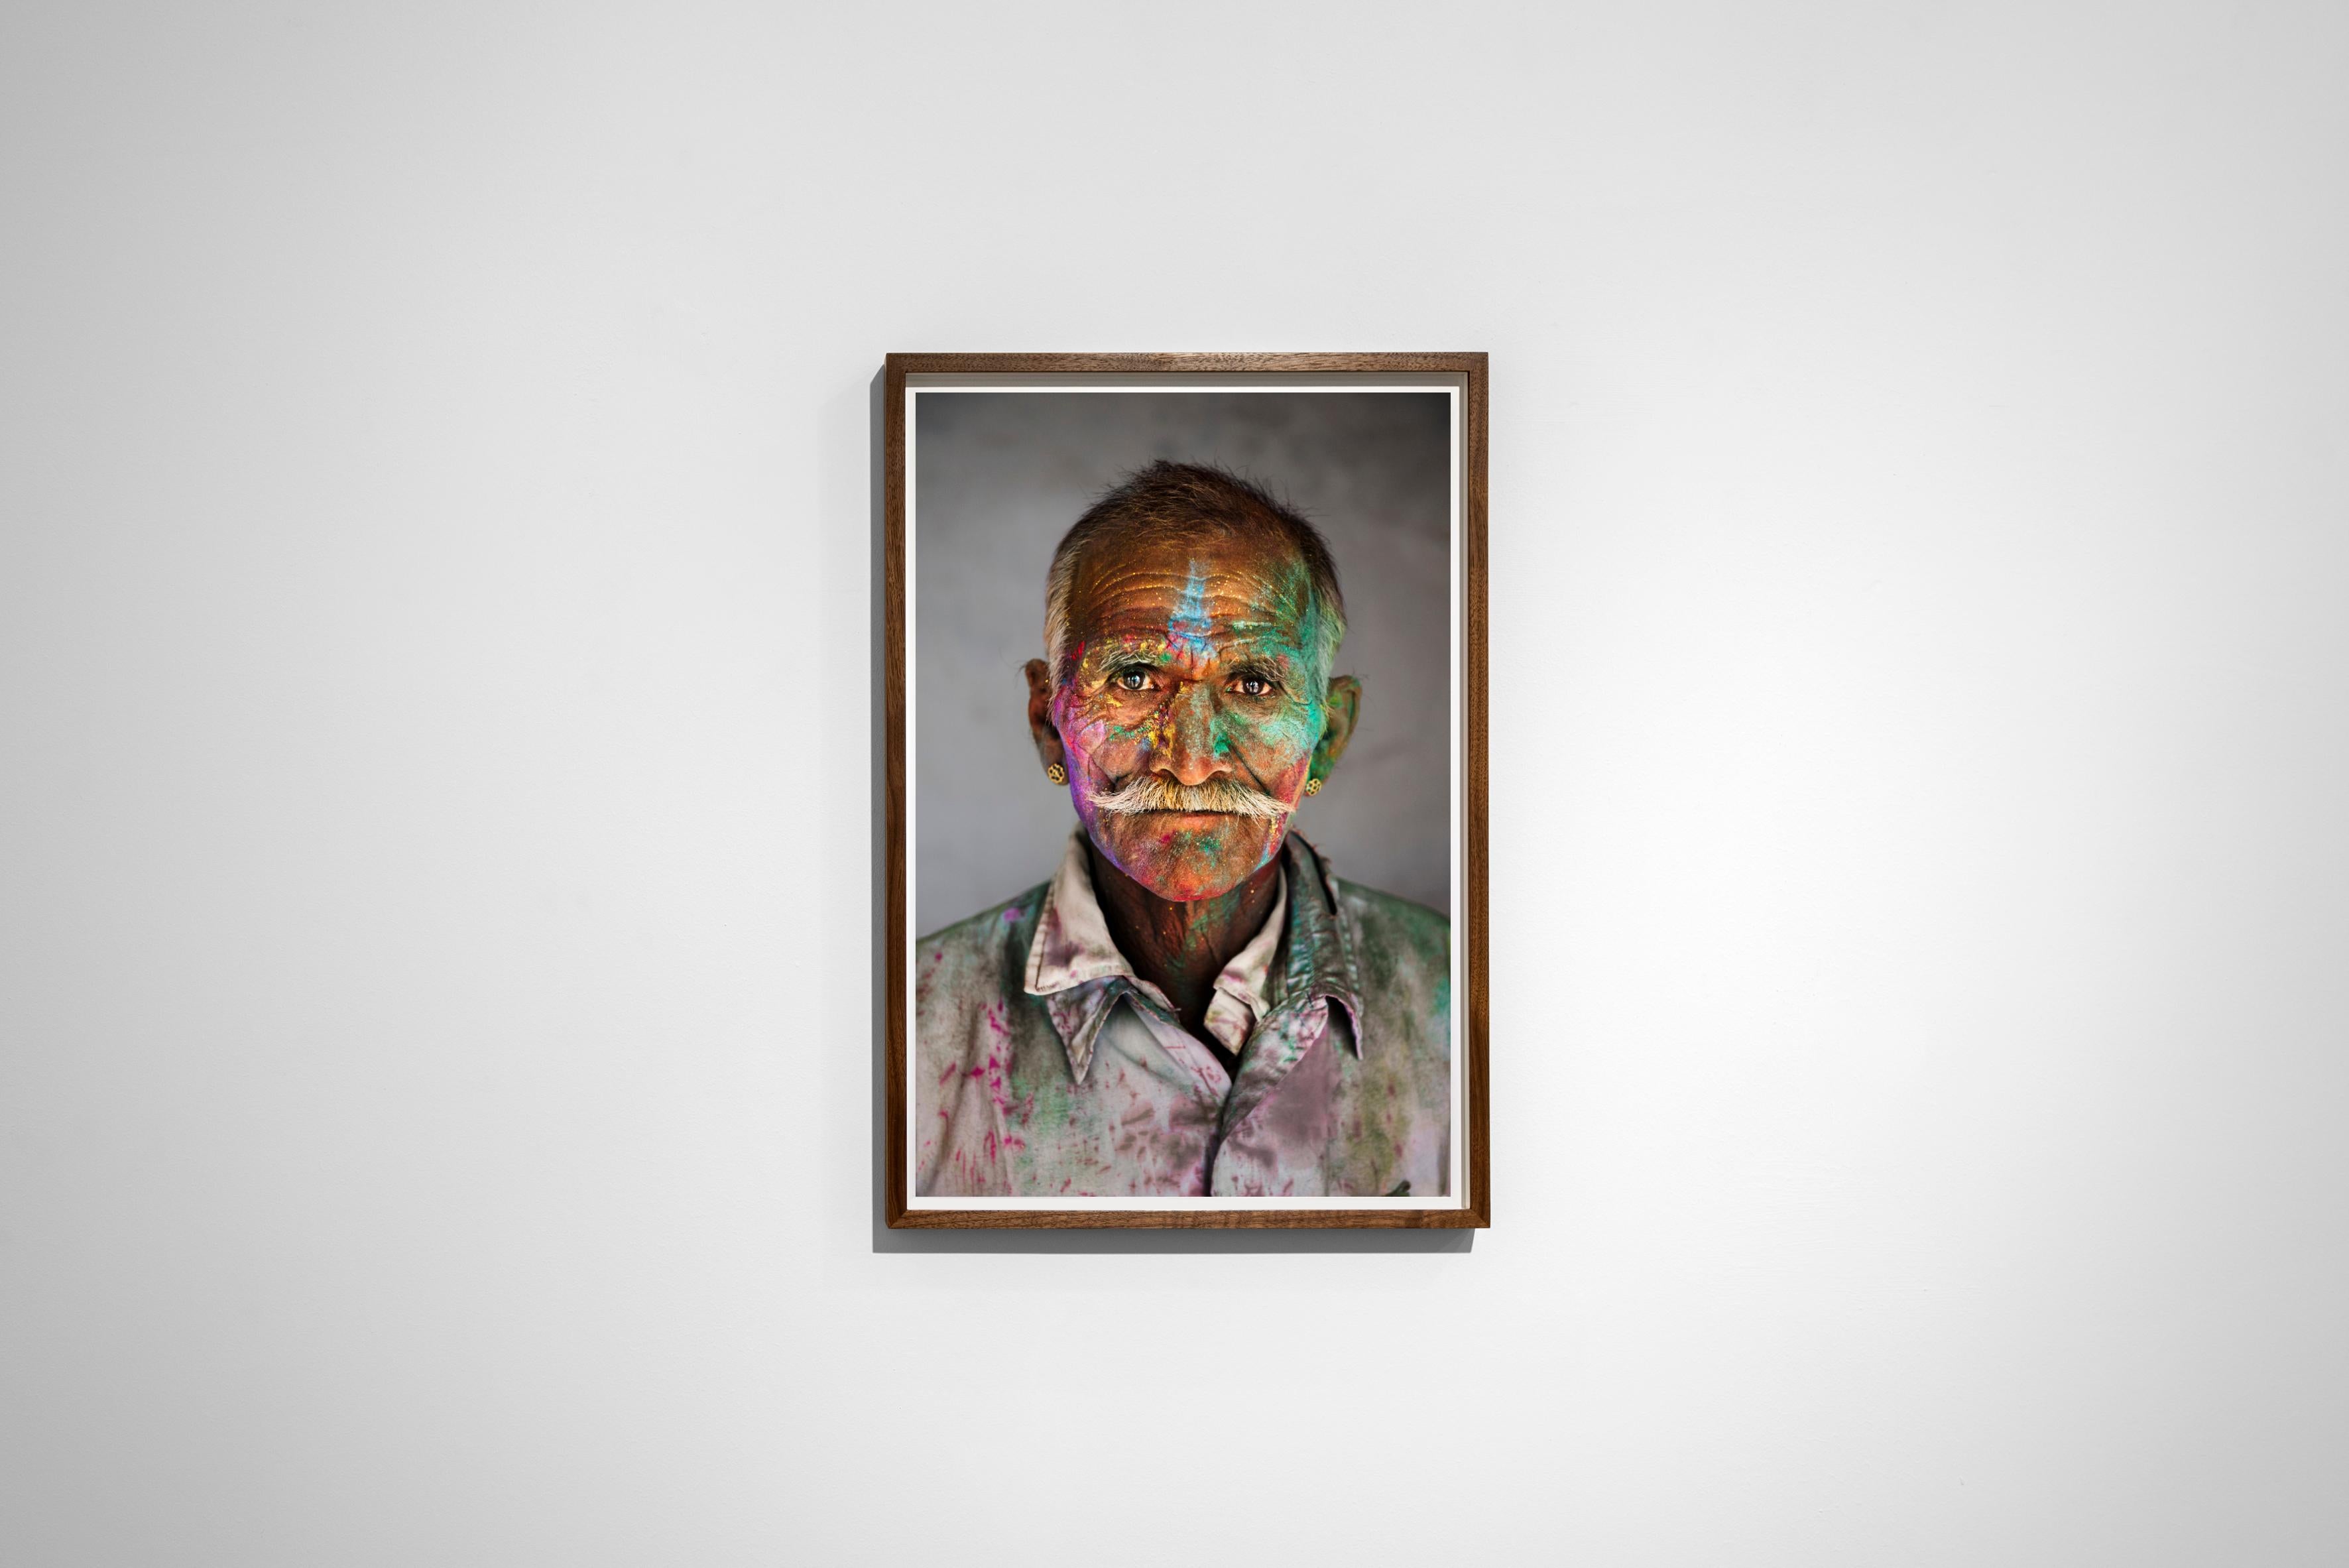 Man Covered in Powder, Rajasthan, Inde, 2009  - Steve McCurry  en vente 1